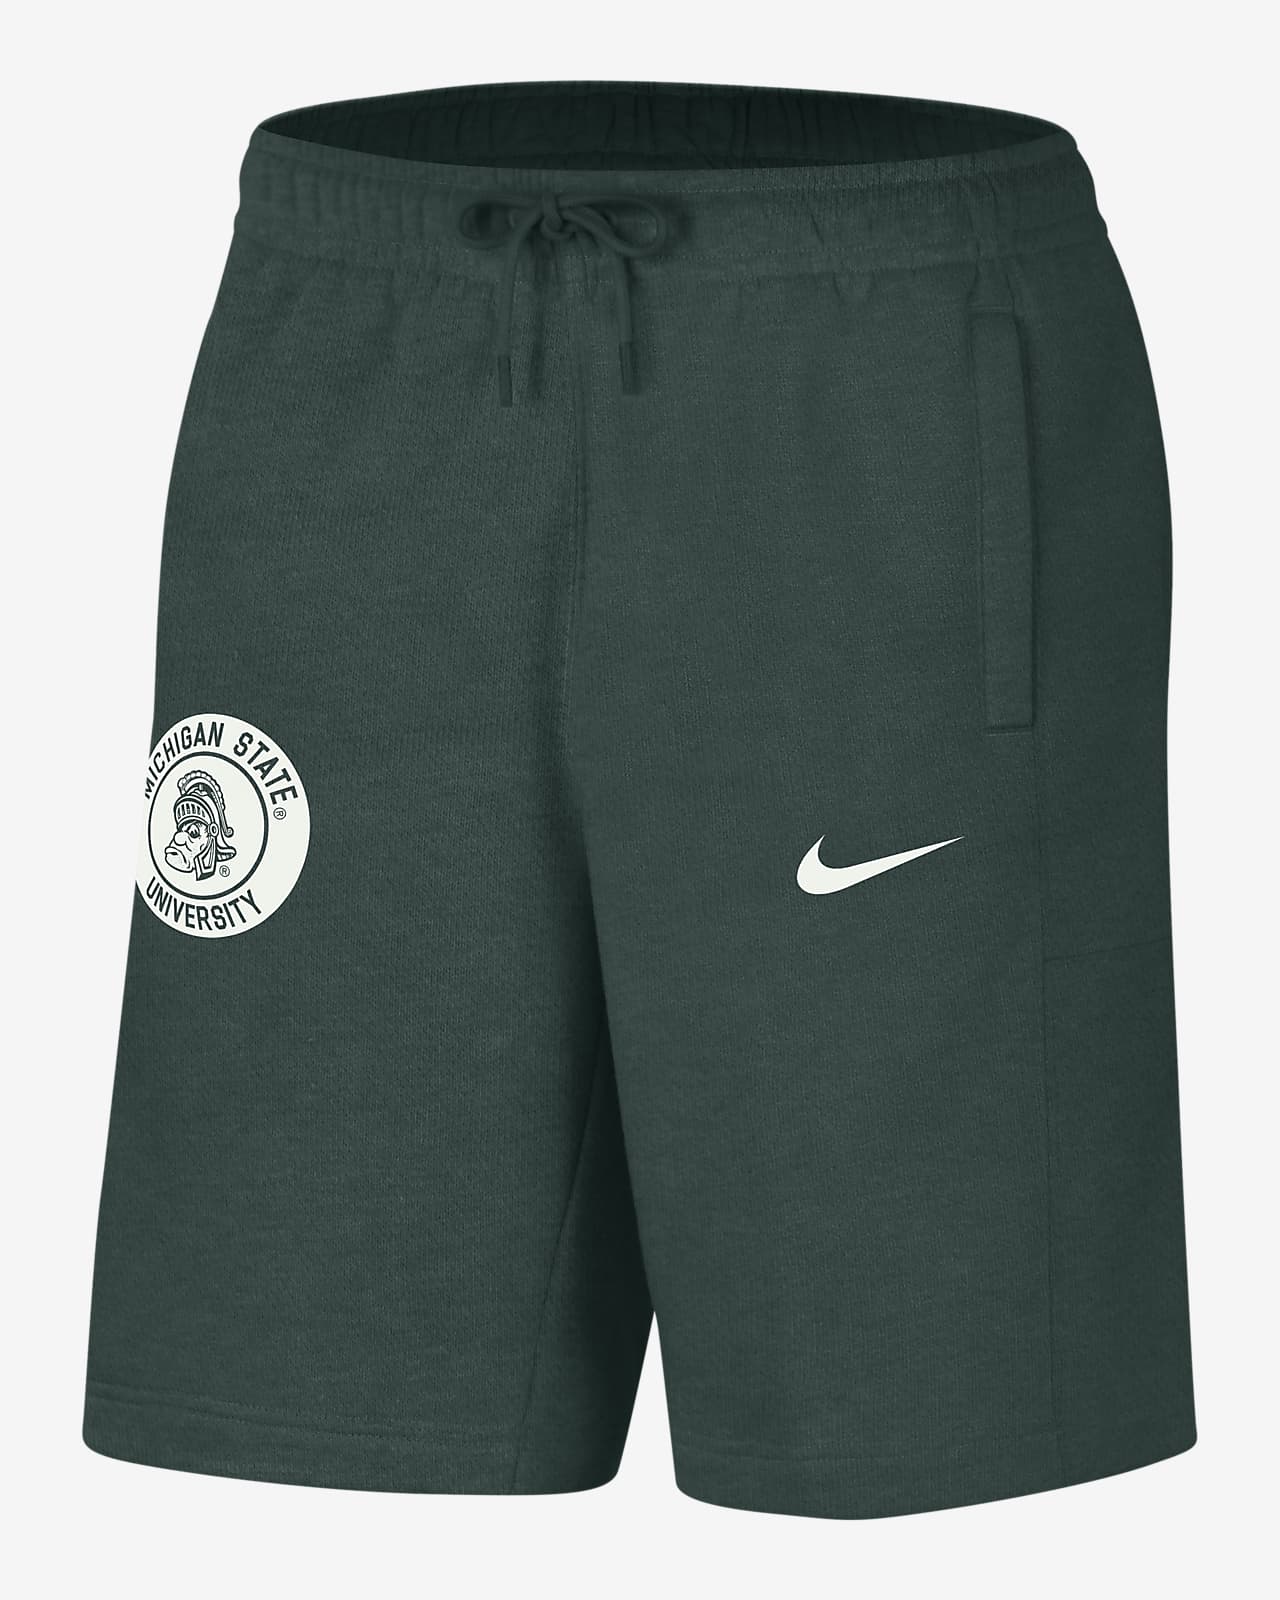 Michigan State Men's Nike College Shorts